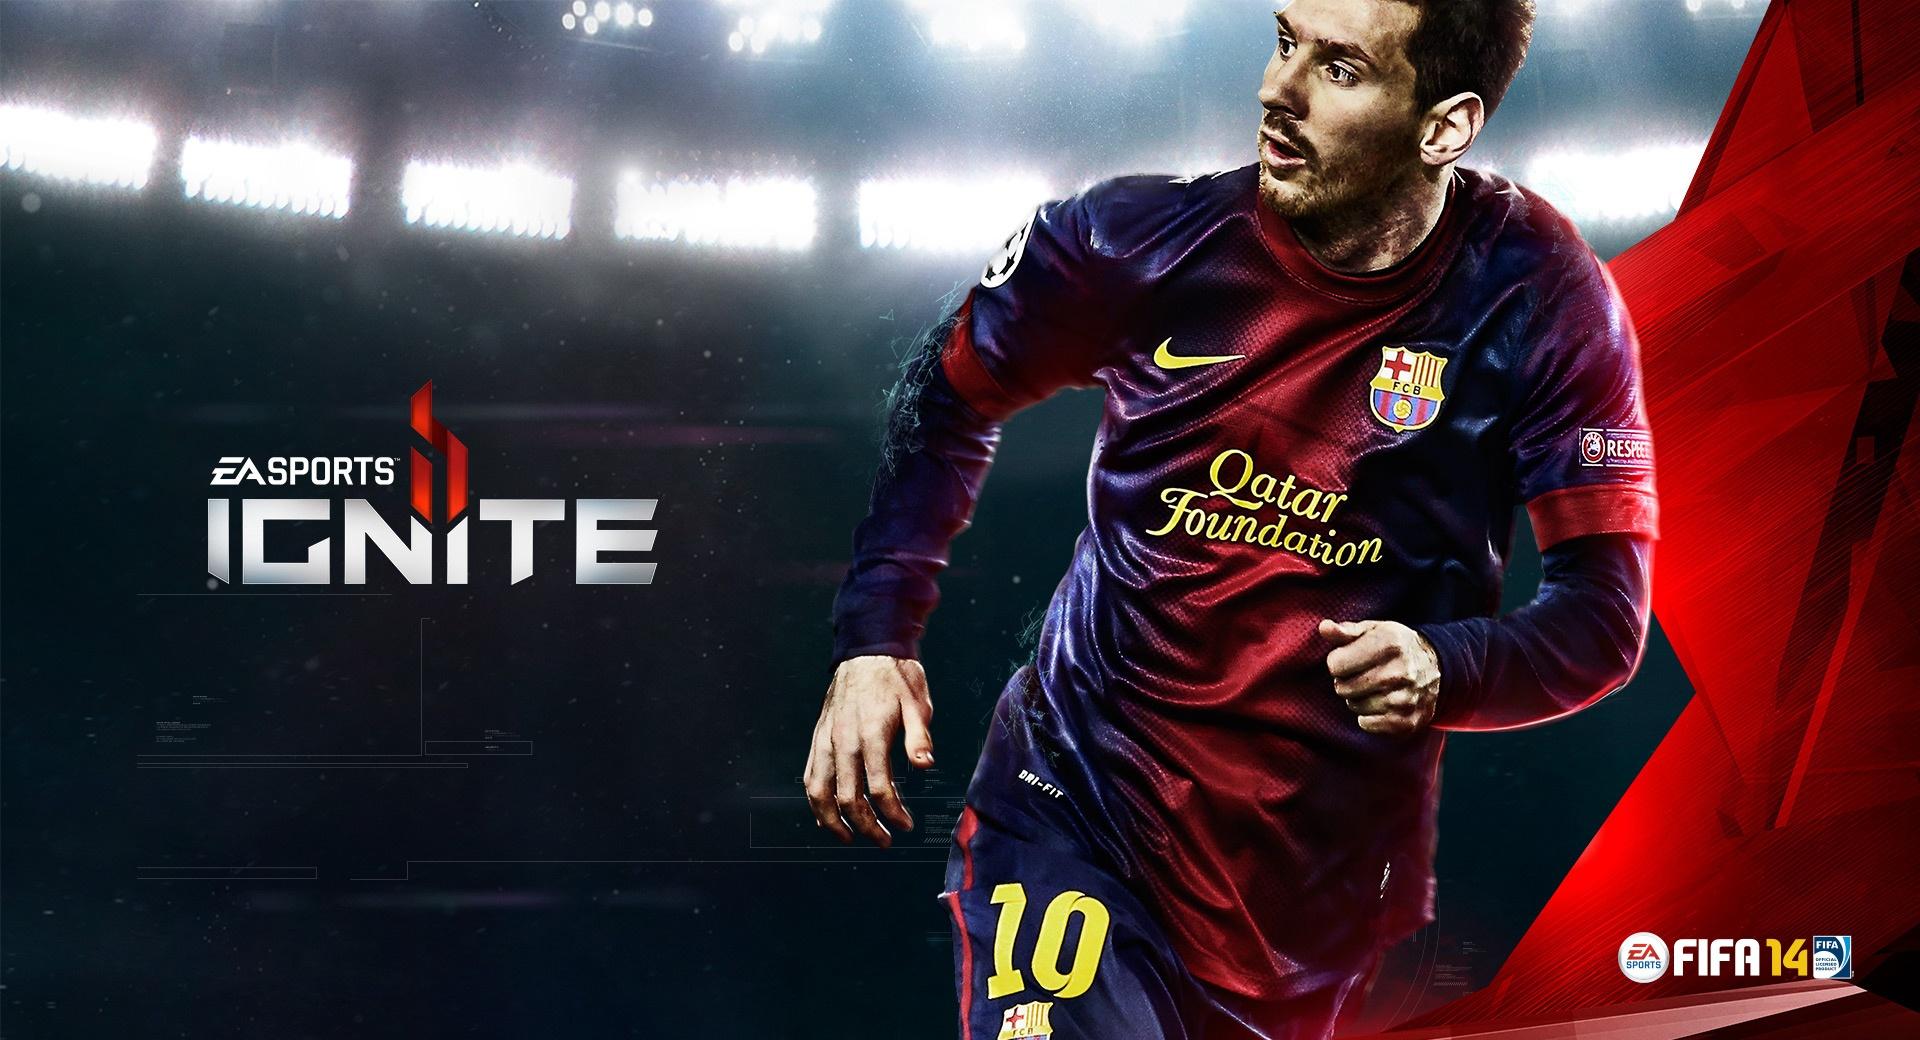 EA Sports Ignite FIFA 14 at 2048 x 2048 iPad size wallpapers HD quality